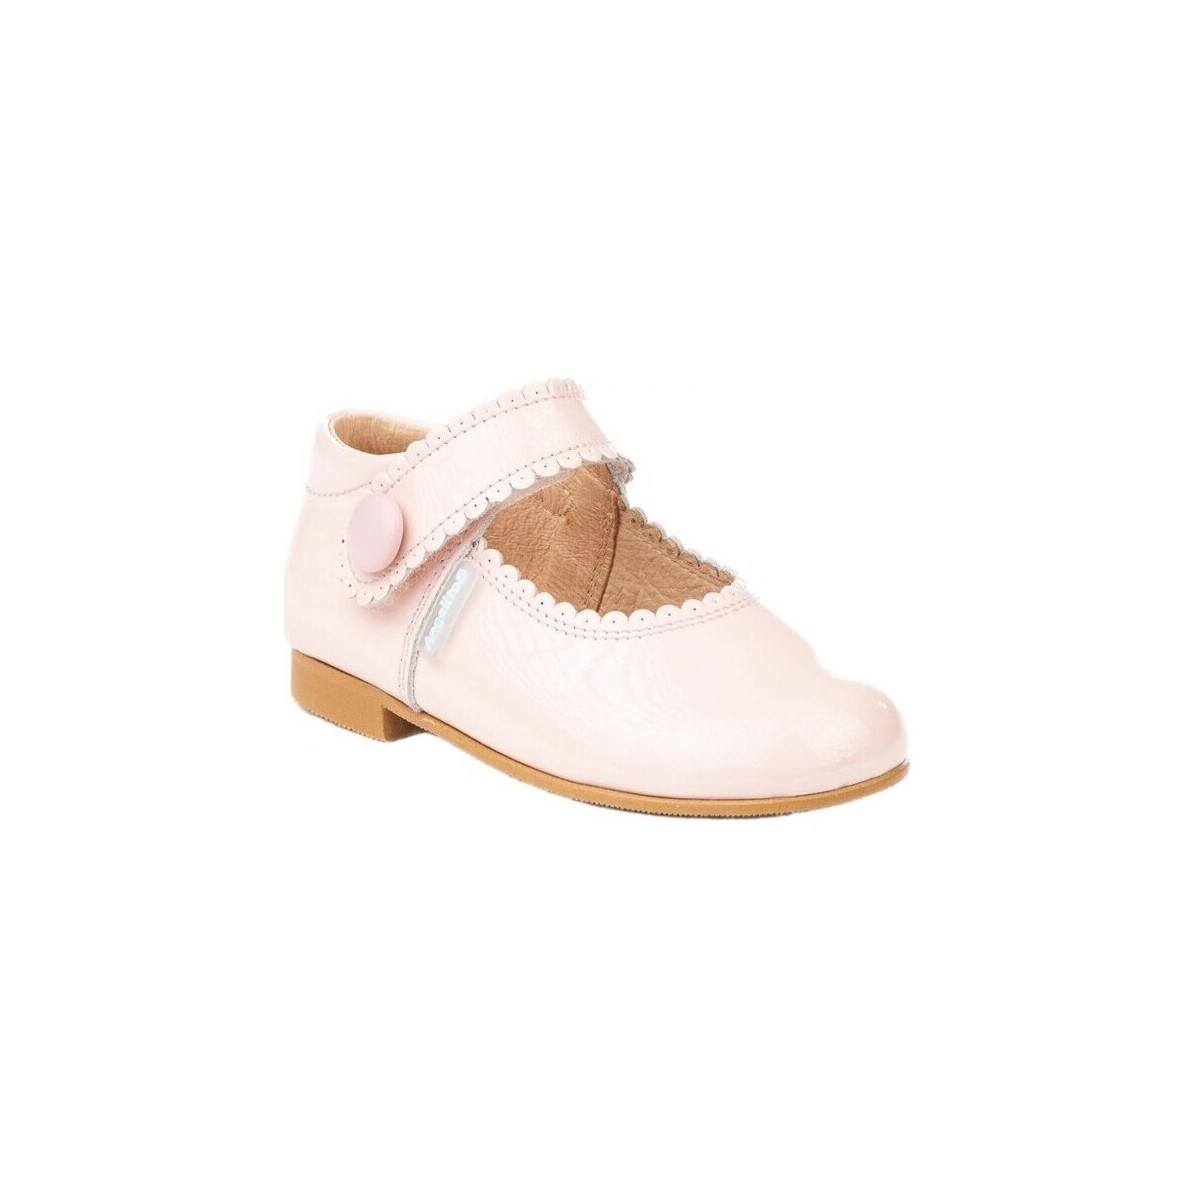 Zapatos Niña Bailarinas-manoletinas Angelitos 25920-15 Rosa